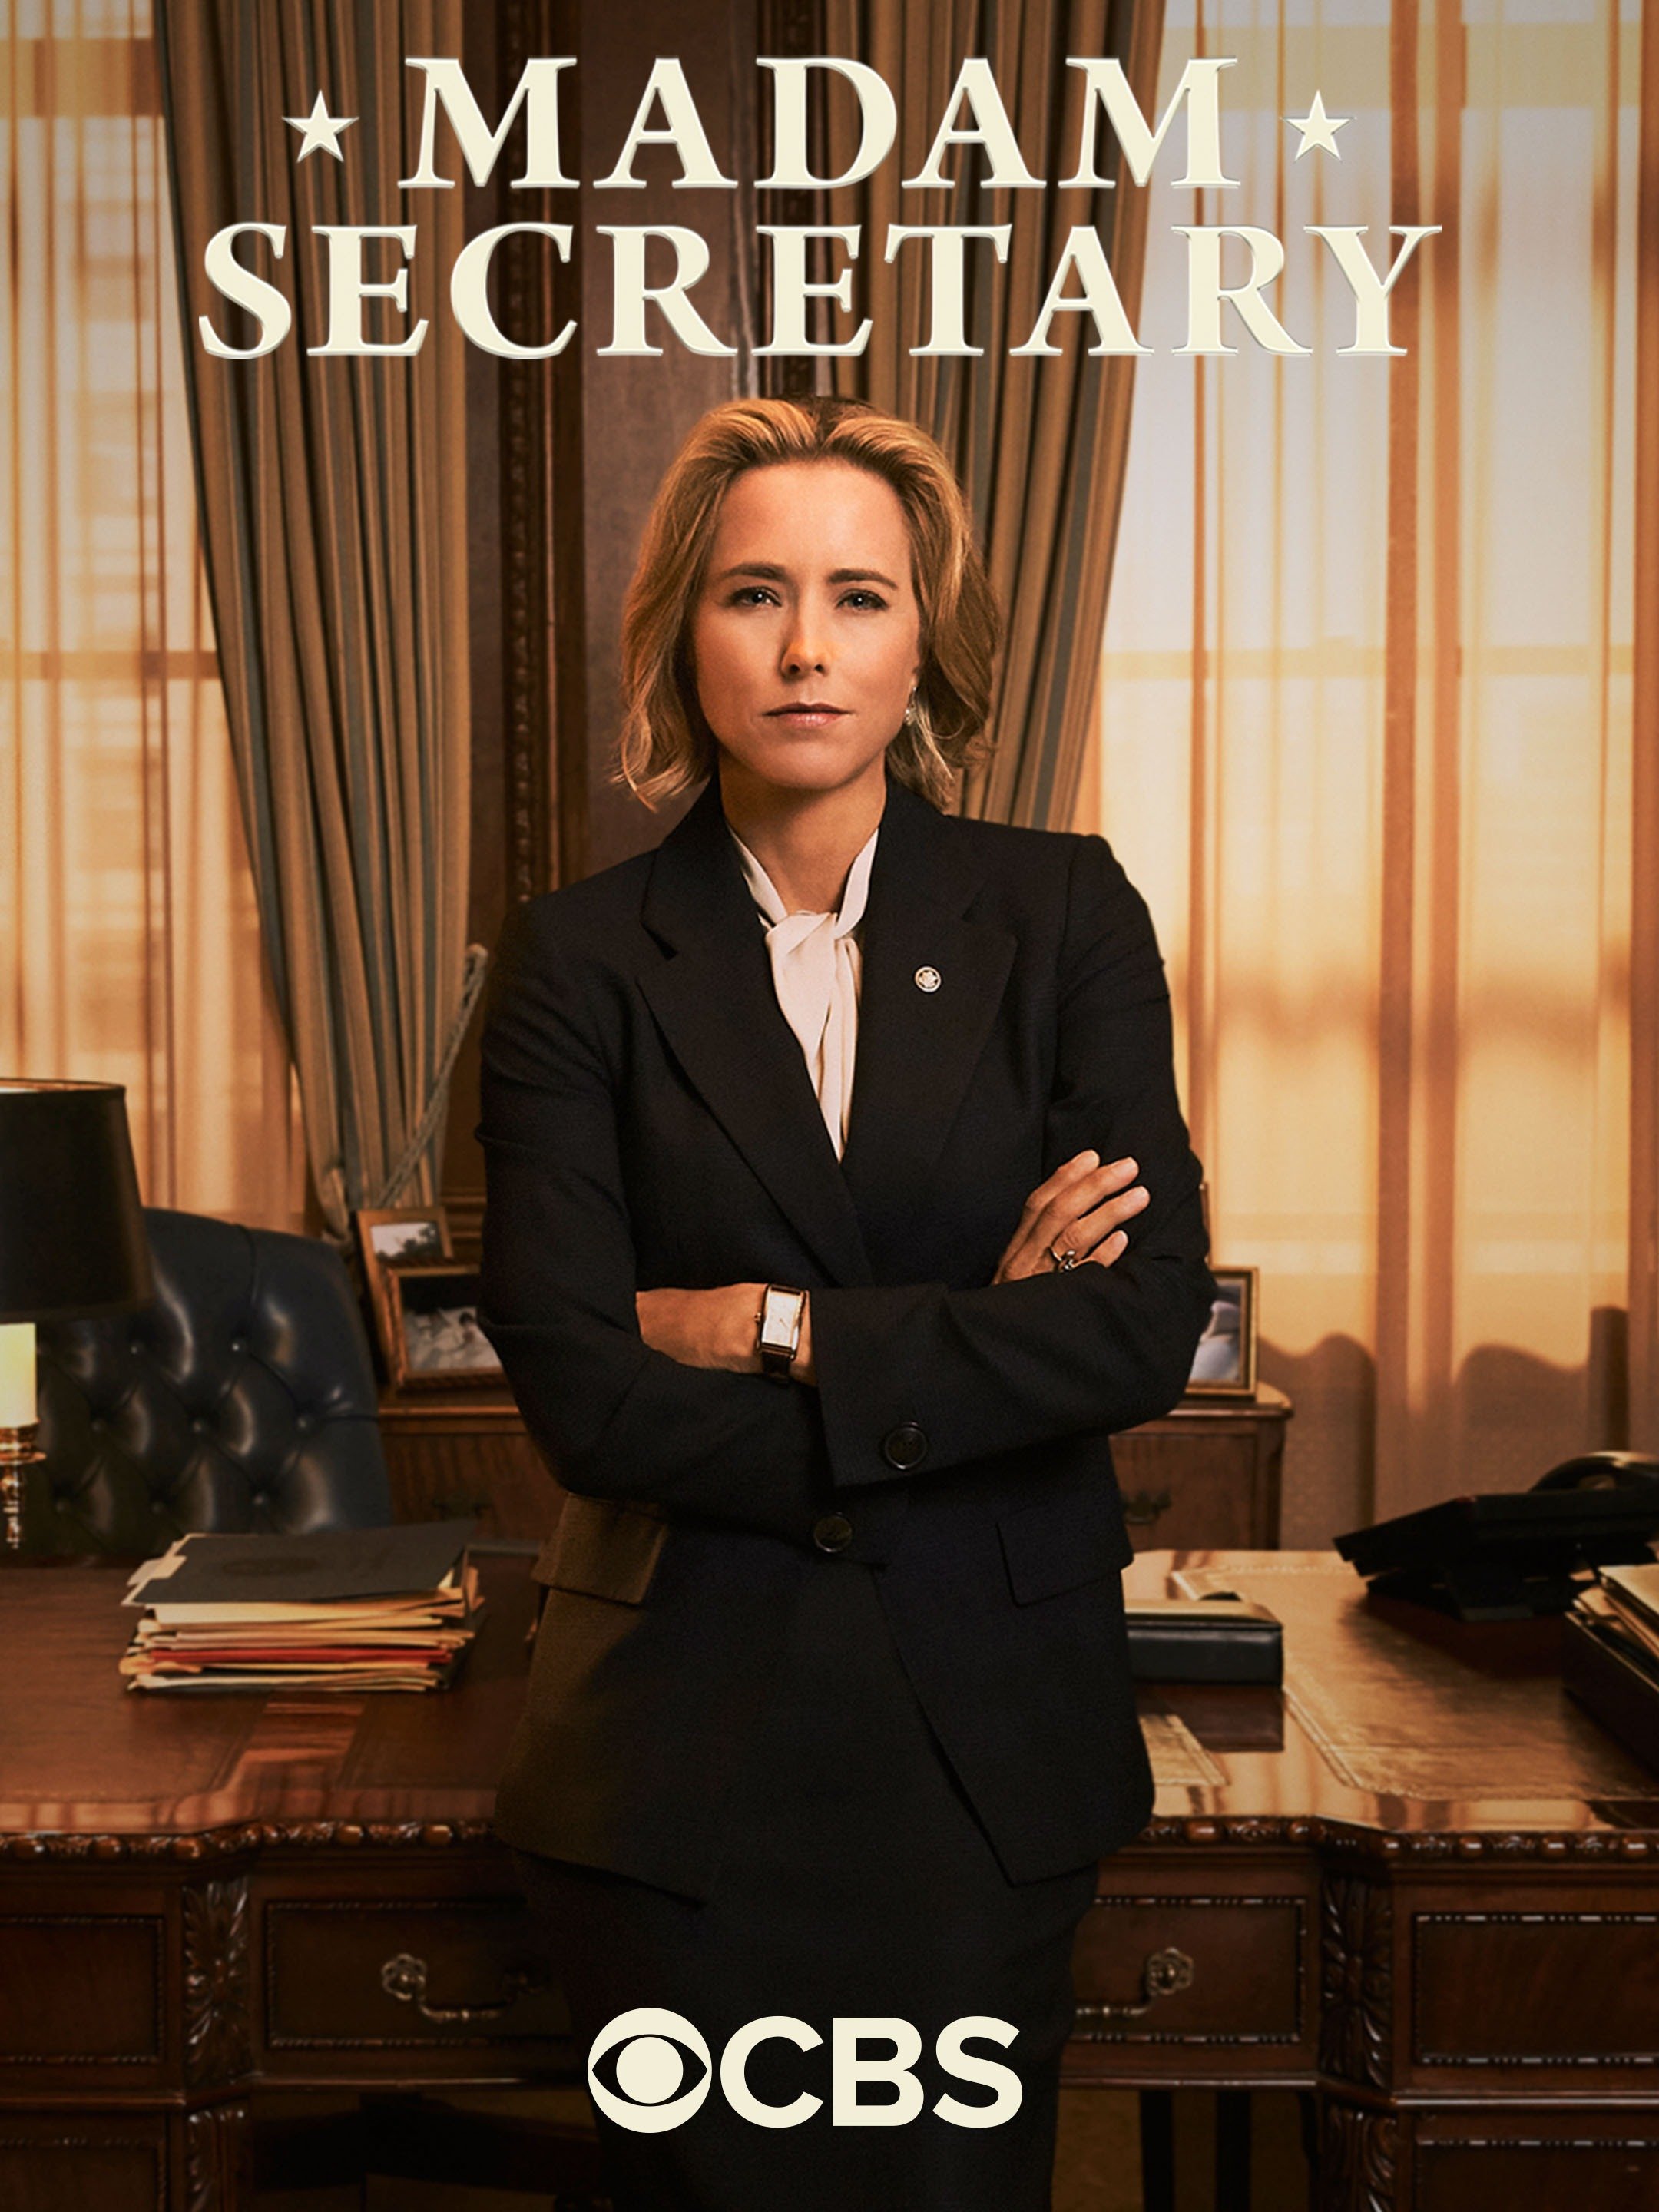 Madam Secretary 6 Season